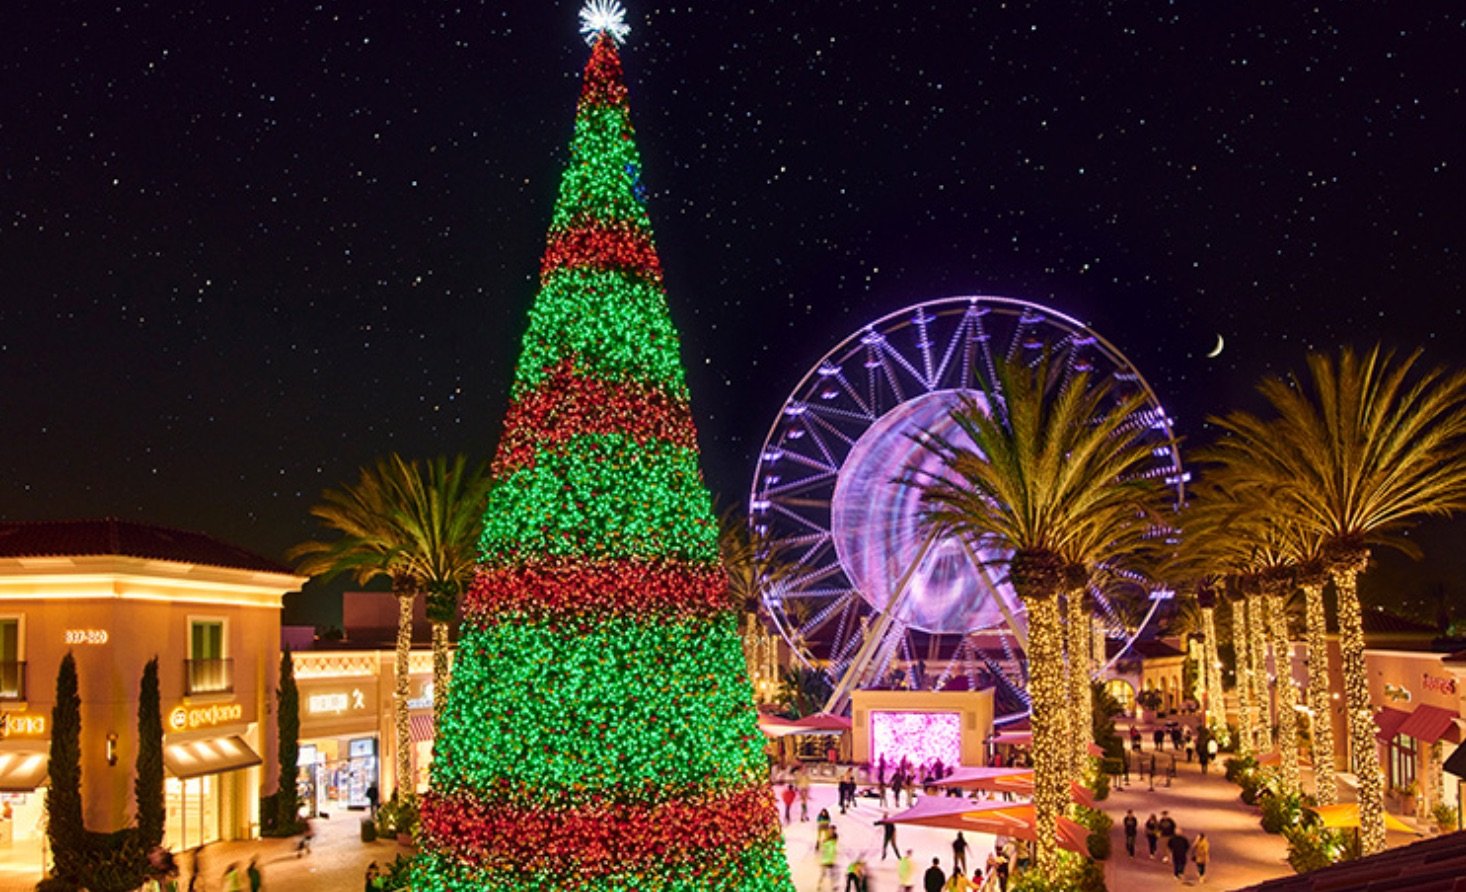 Christmas Tree at Irvine Spectrum